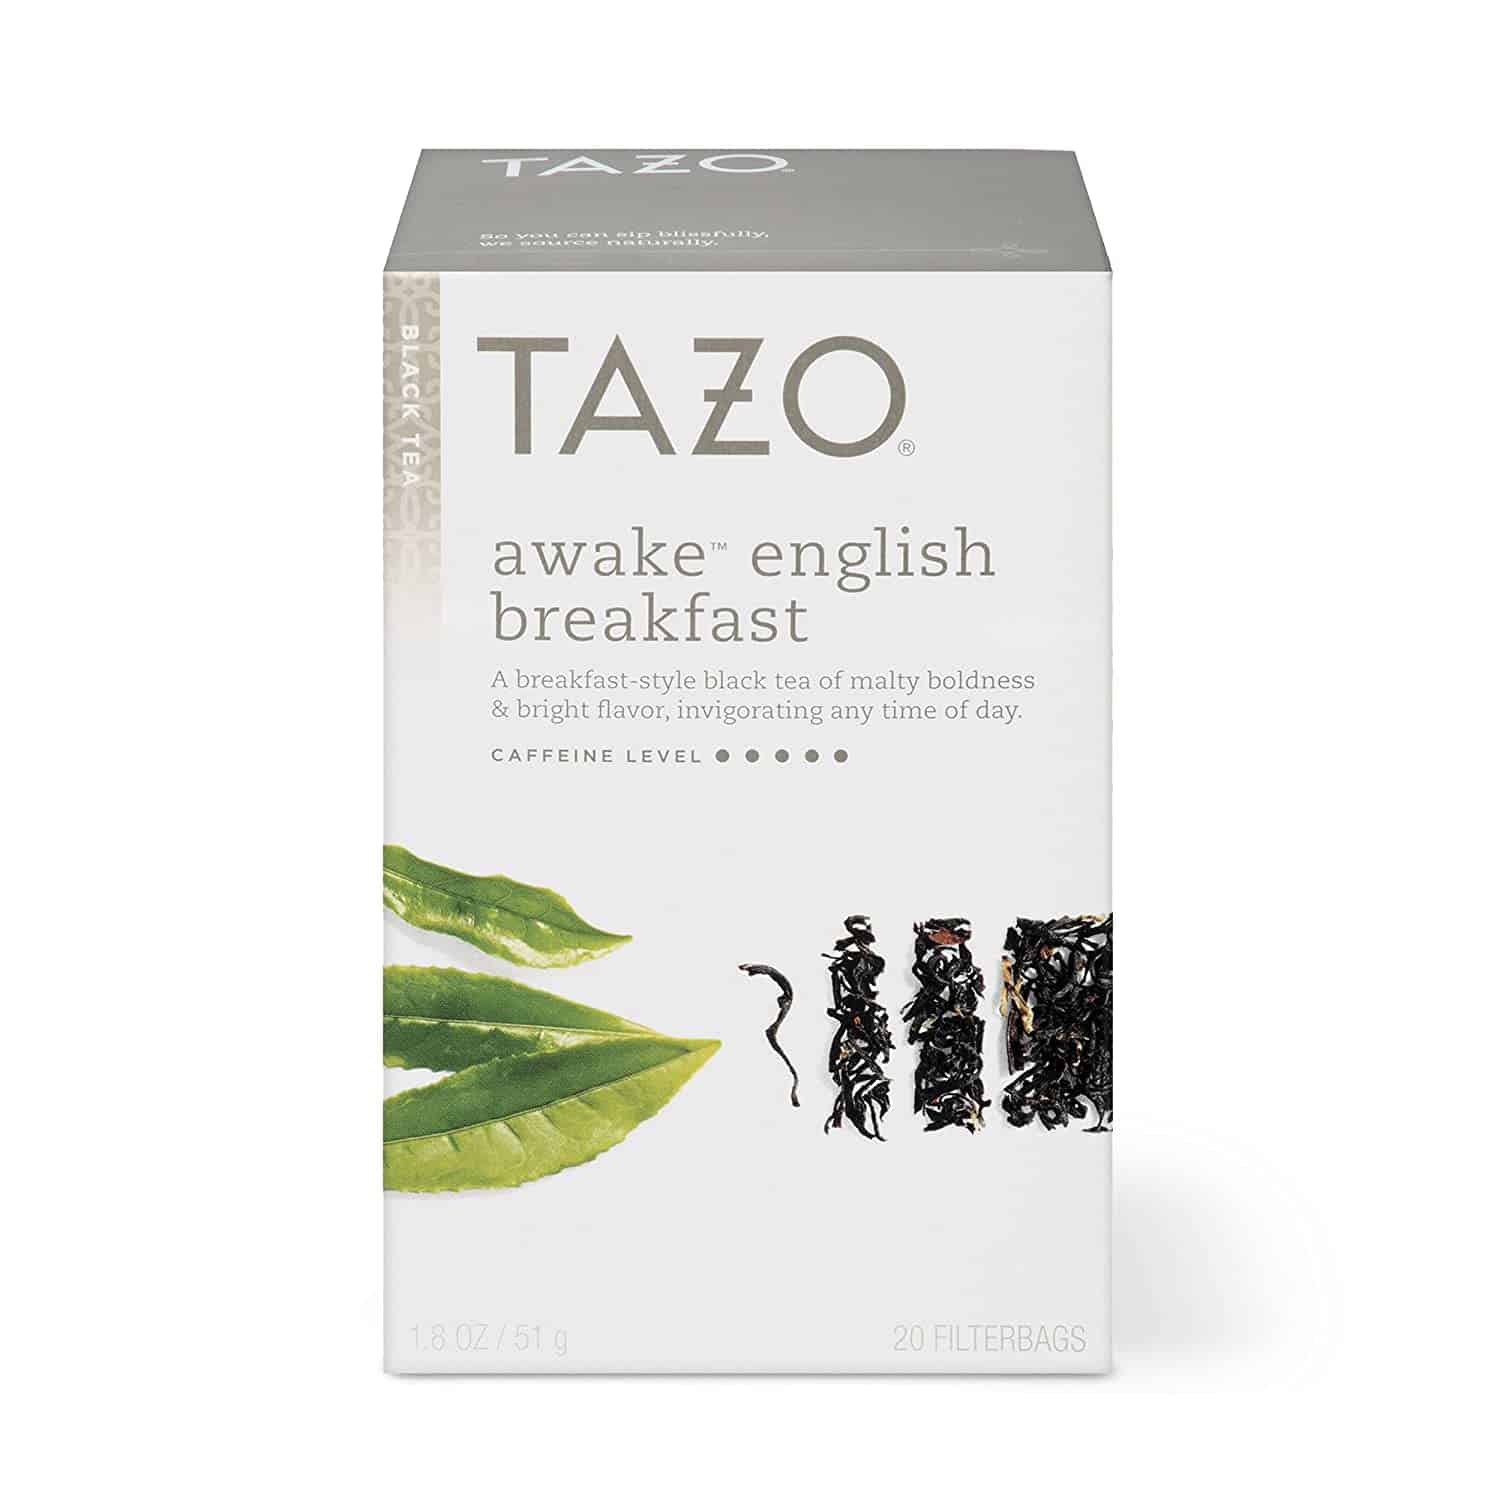 Tazo Awake English Breakfast Black Tea Filterbags, 20 count-1.8 OZ